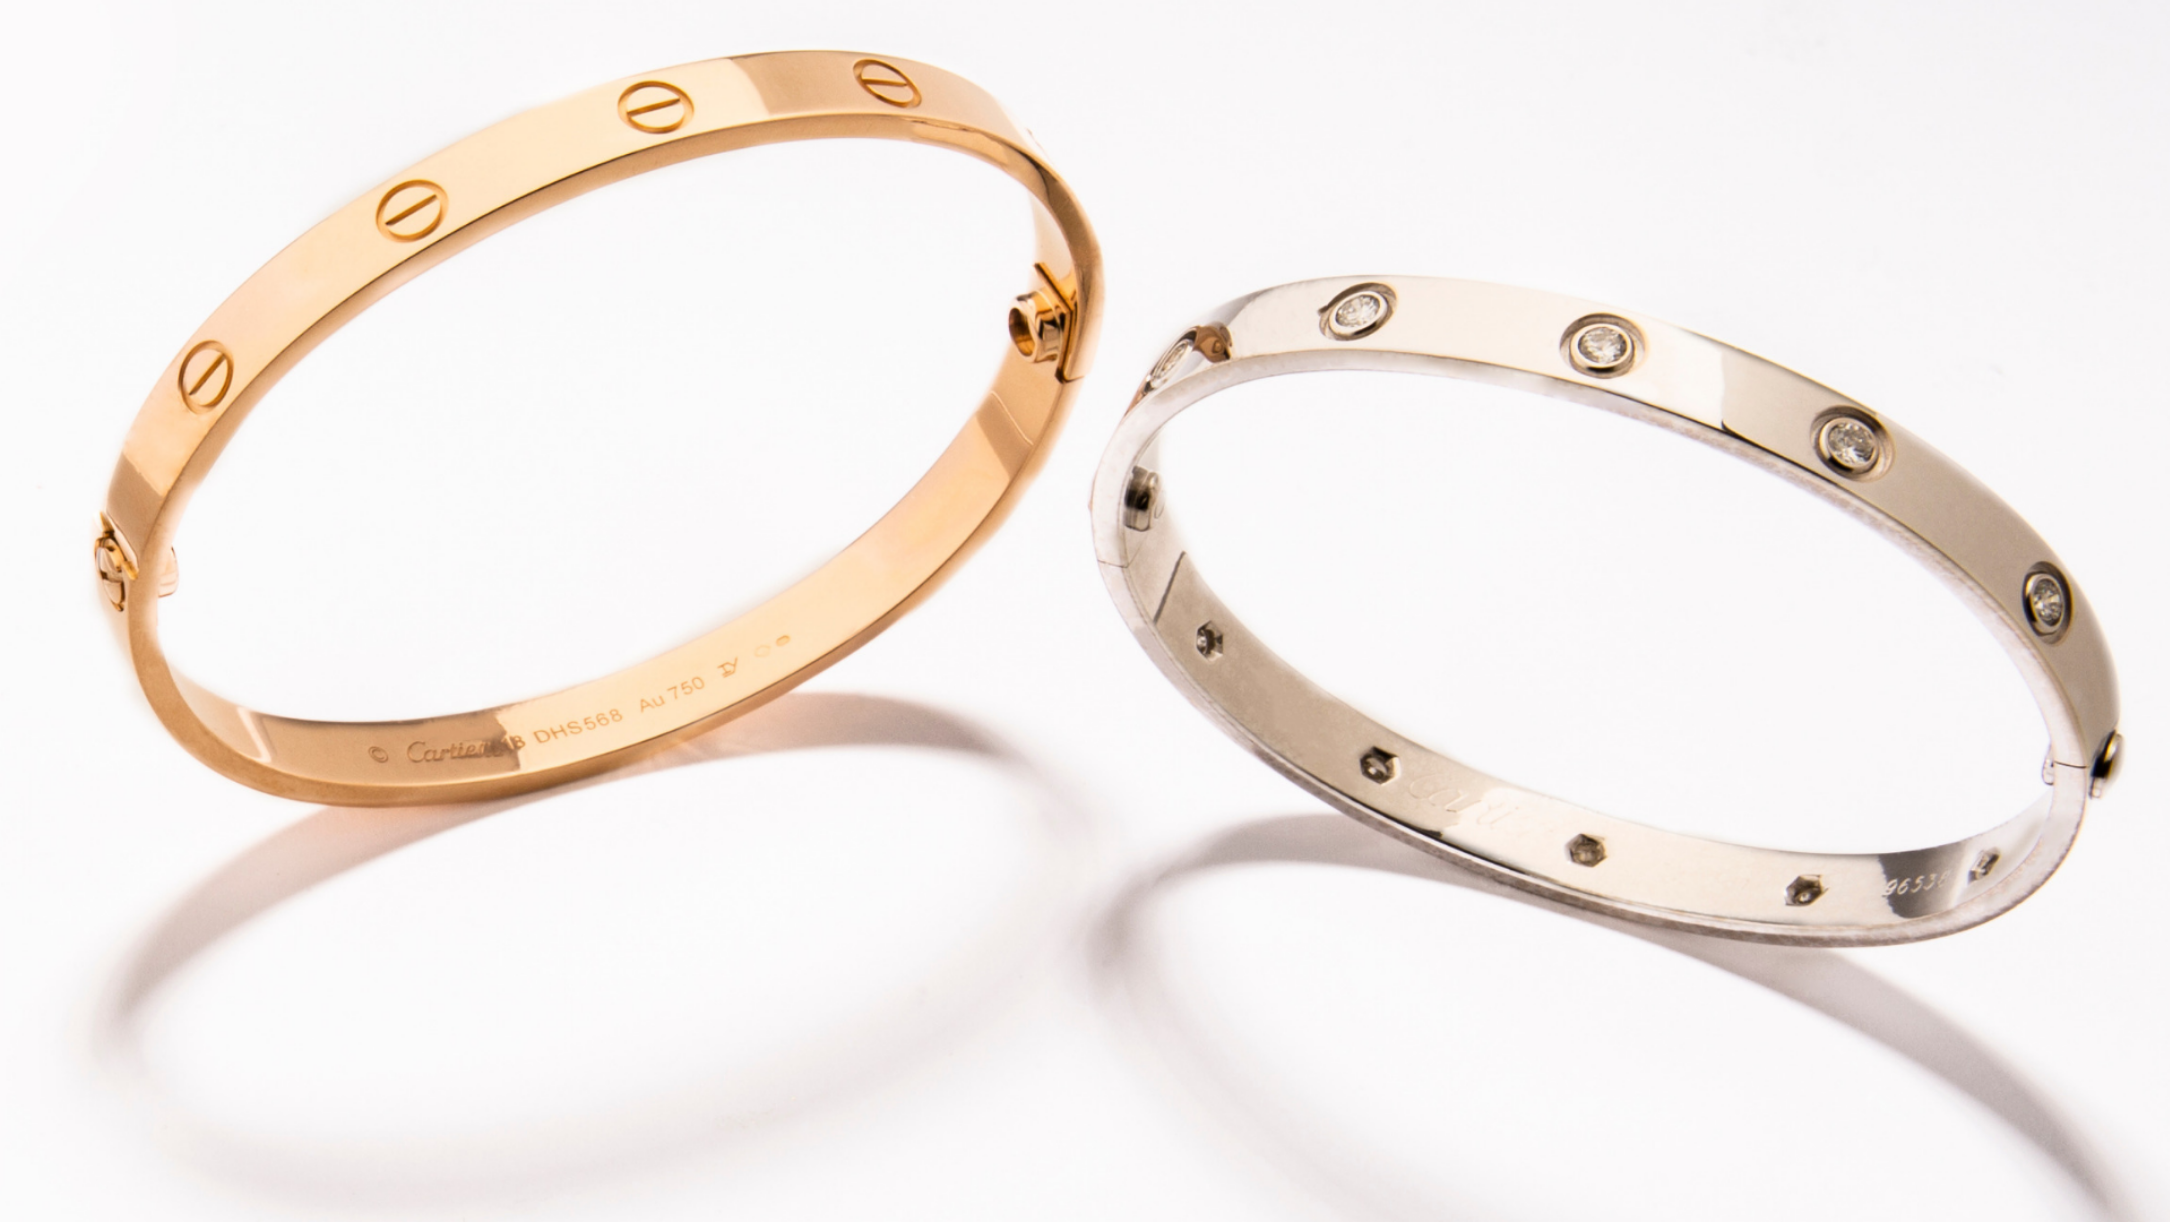 Copper Love Heart Black Beads Gold Hand Mangalsutra Bracelet For Women –  ZIVOM